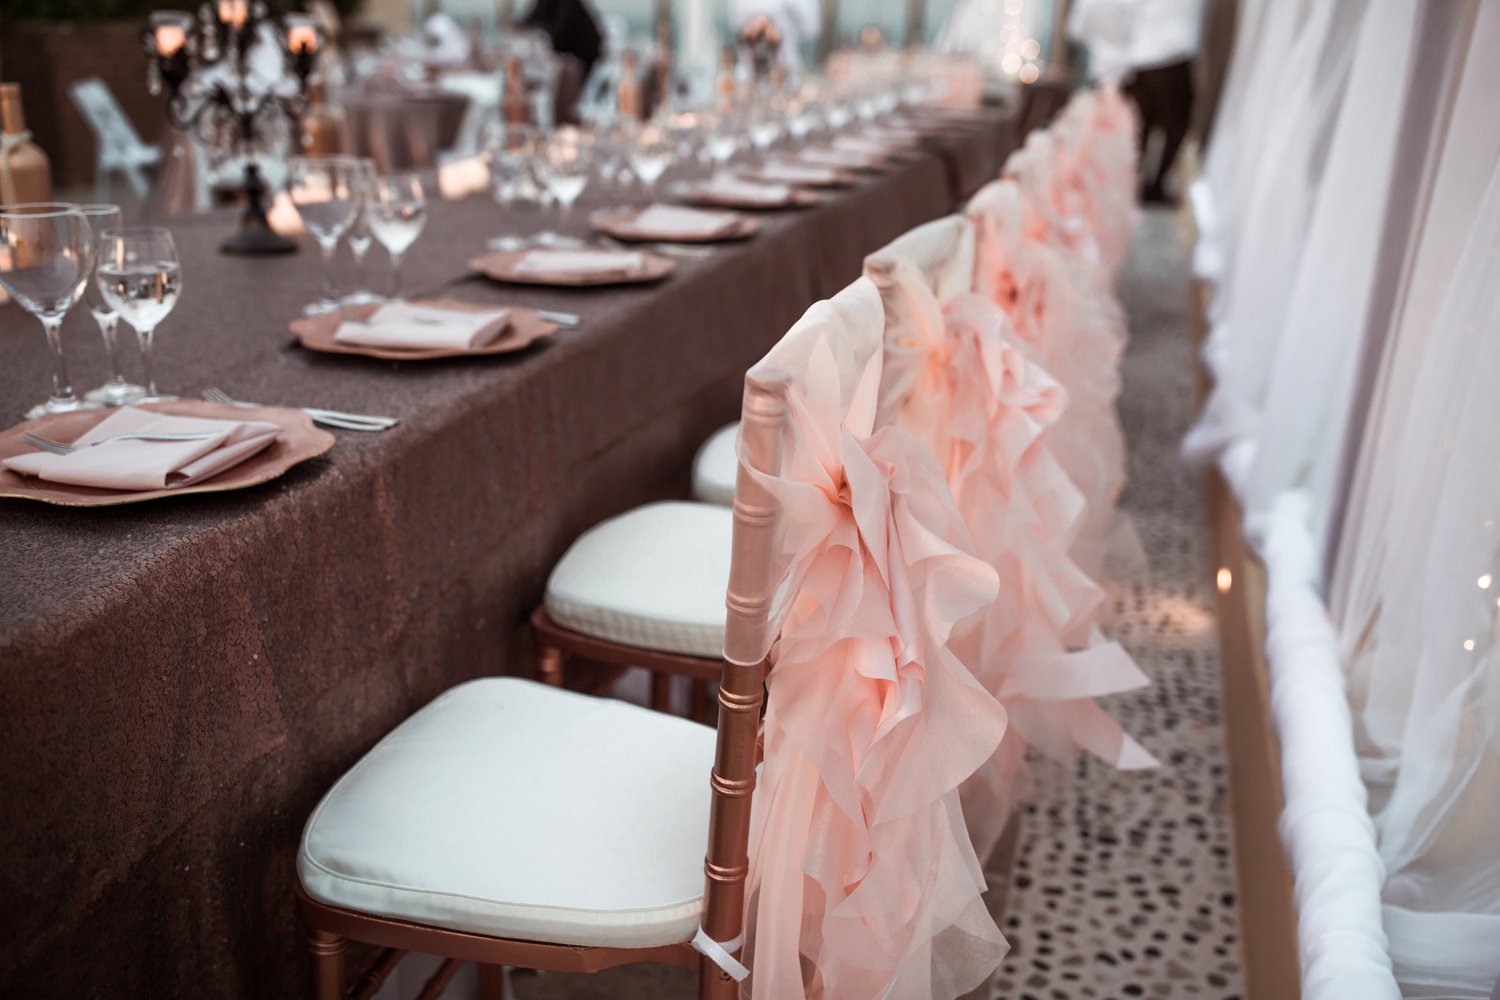  images by feliciathephotographer.com | destination wedding photographer | el dorado riviera maya | glamorous | beachside | resort | details | reception | pink ruffles | classic | venue | white chairs | 